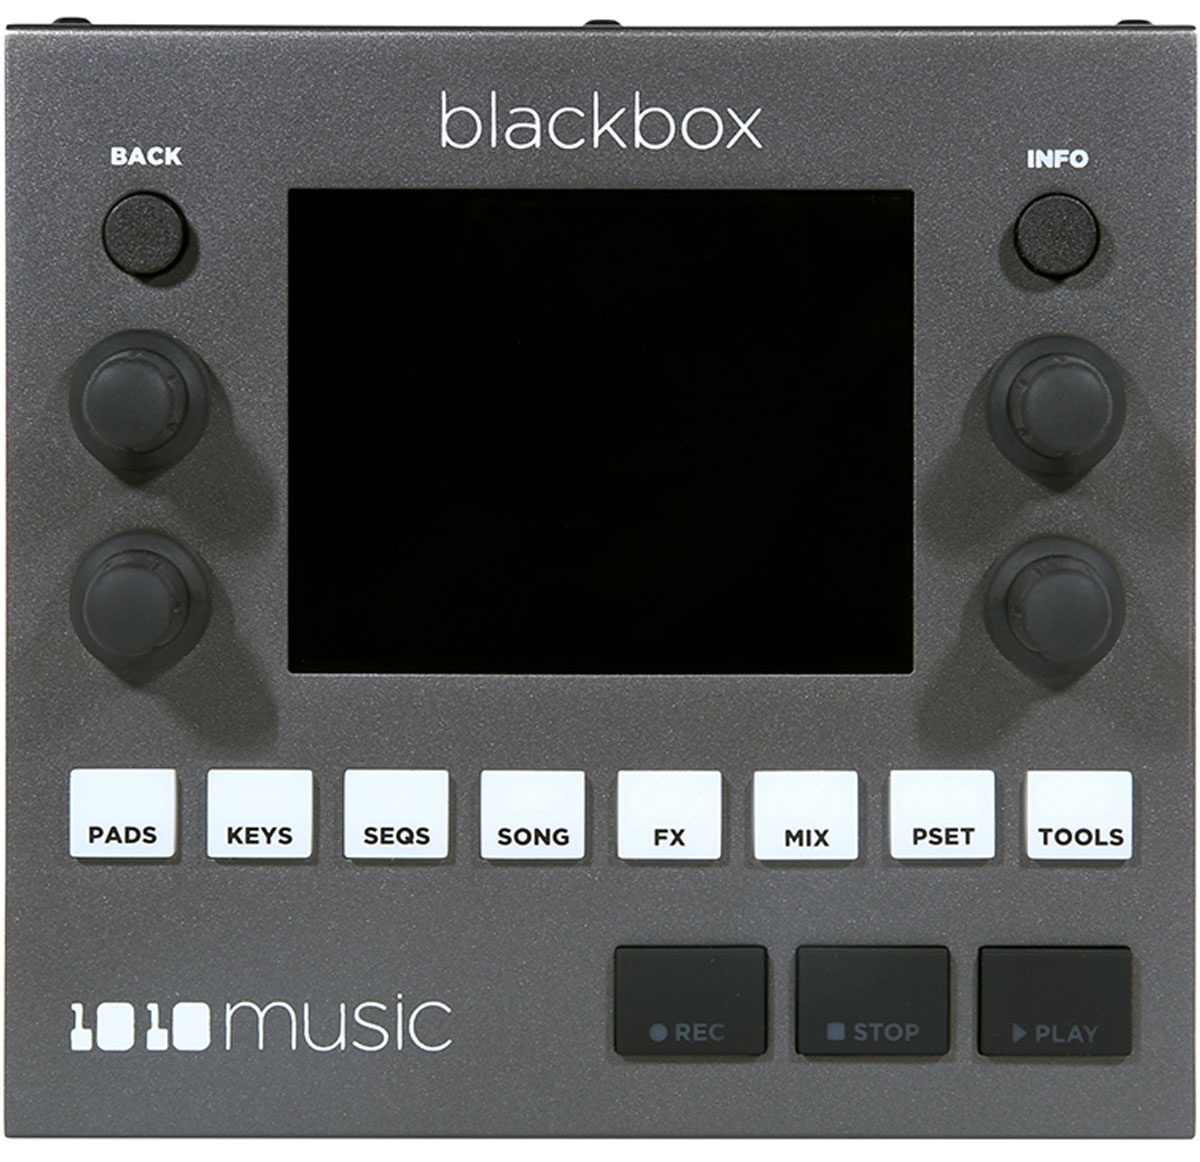 1010music Blackbox по цене 88 200 ₽